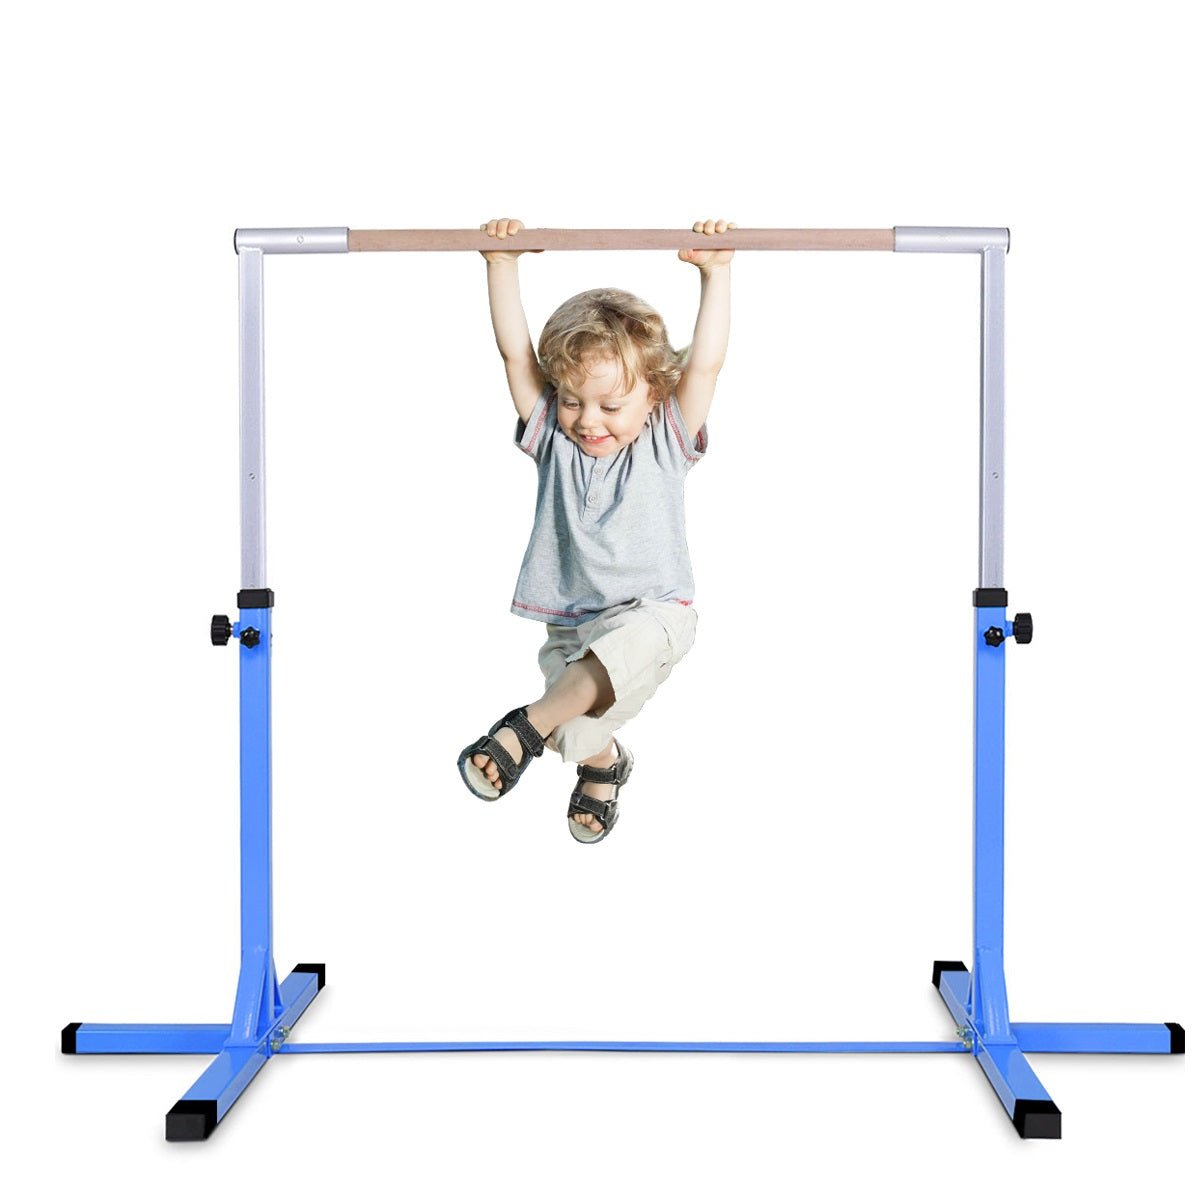 Kids Gymnastics Bar - Buy Today for Skill Development